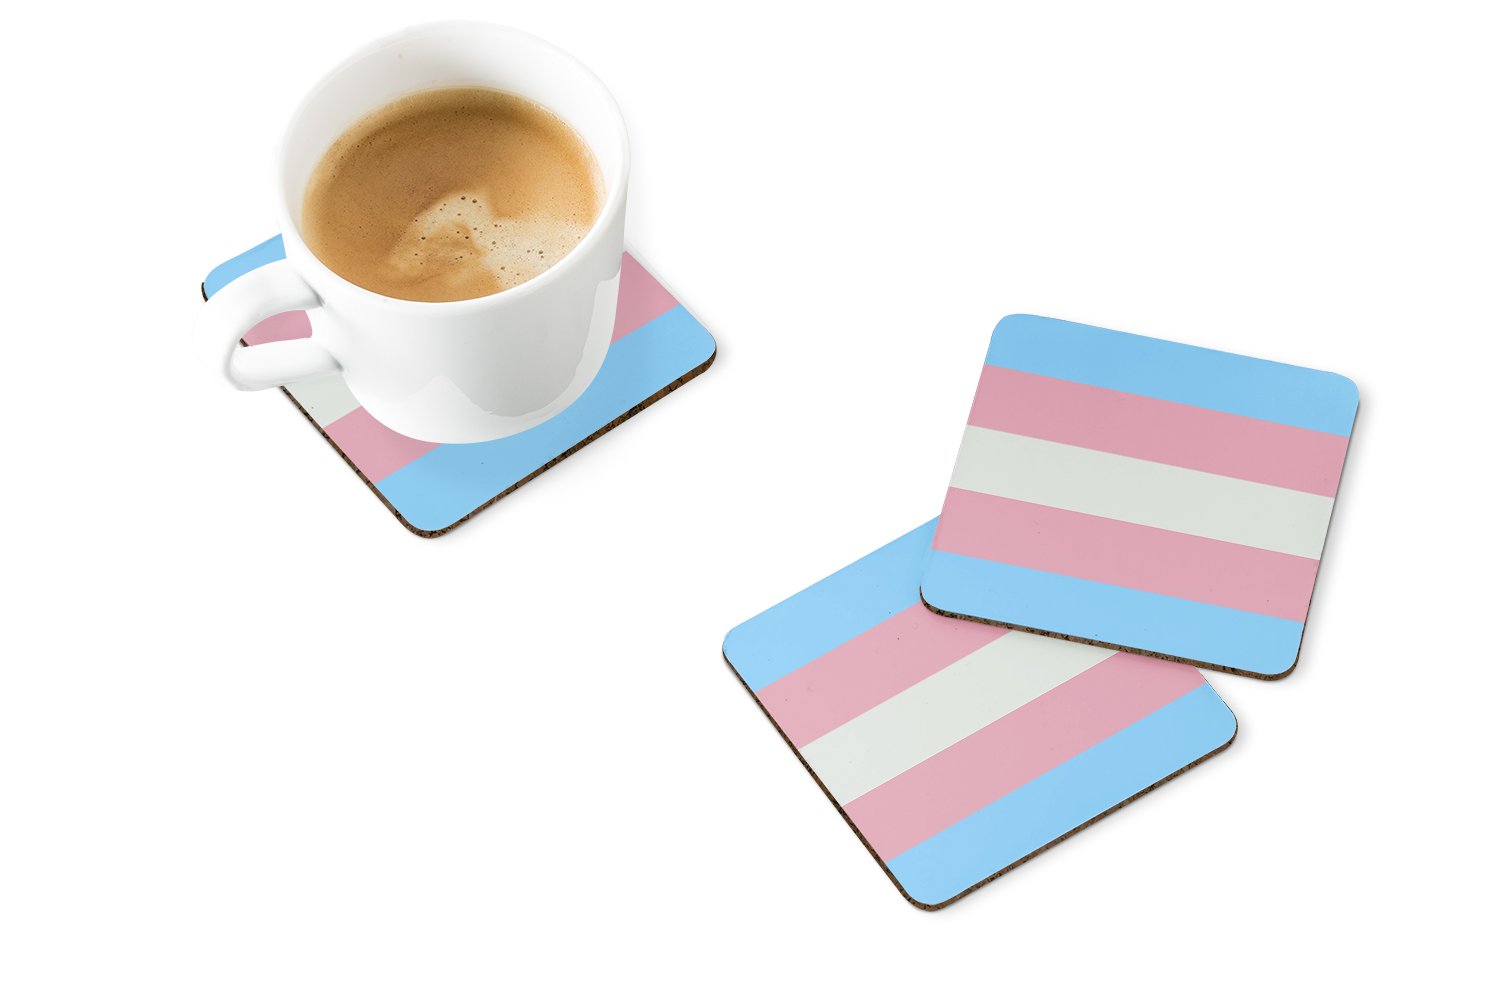 Transgender Pride Foam Coaster Set of 4 - the-store.com